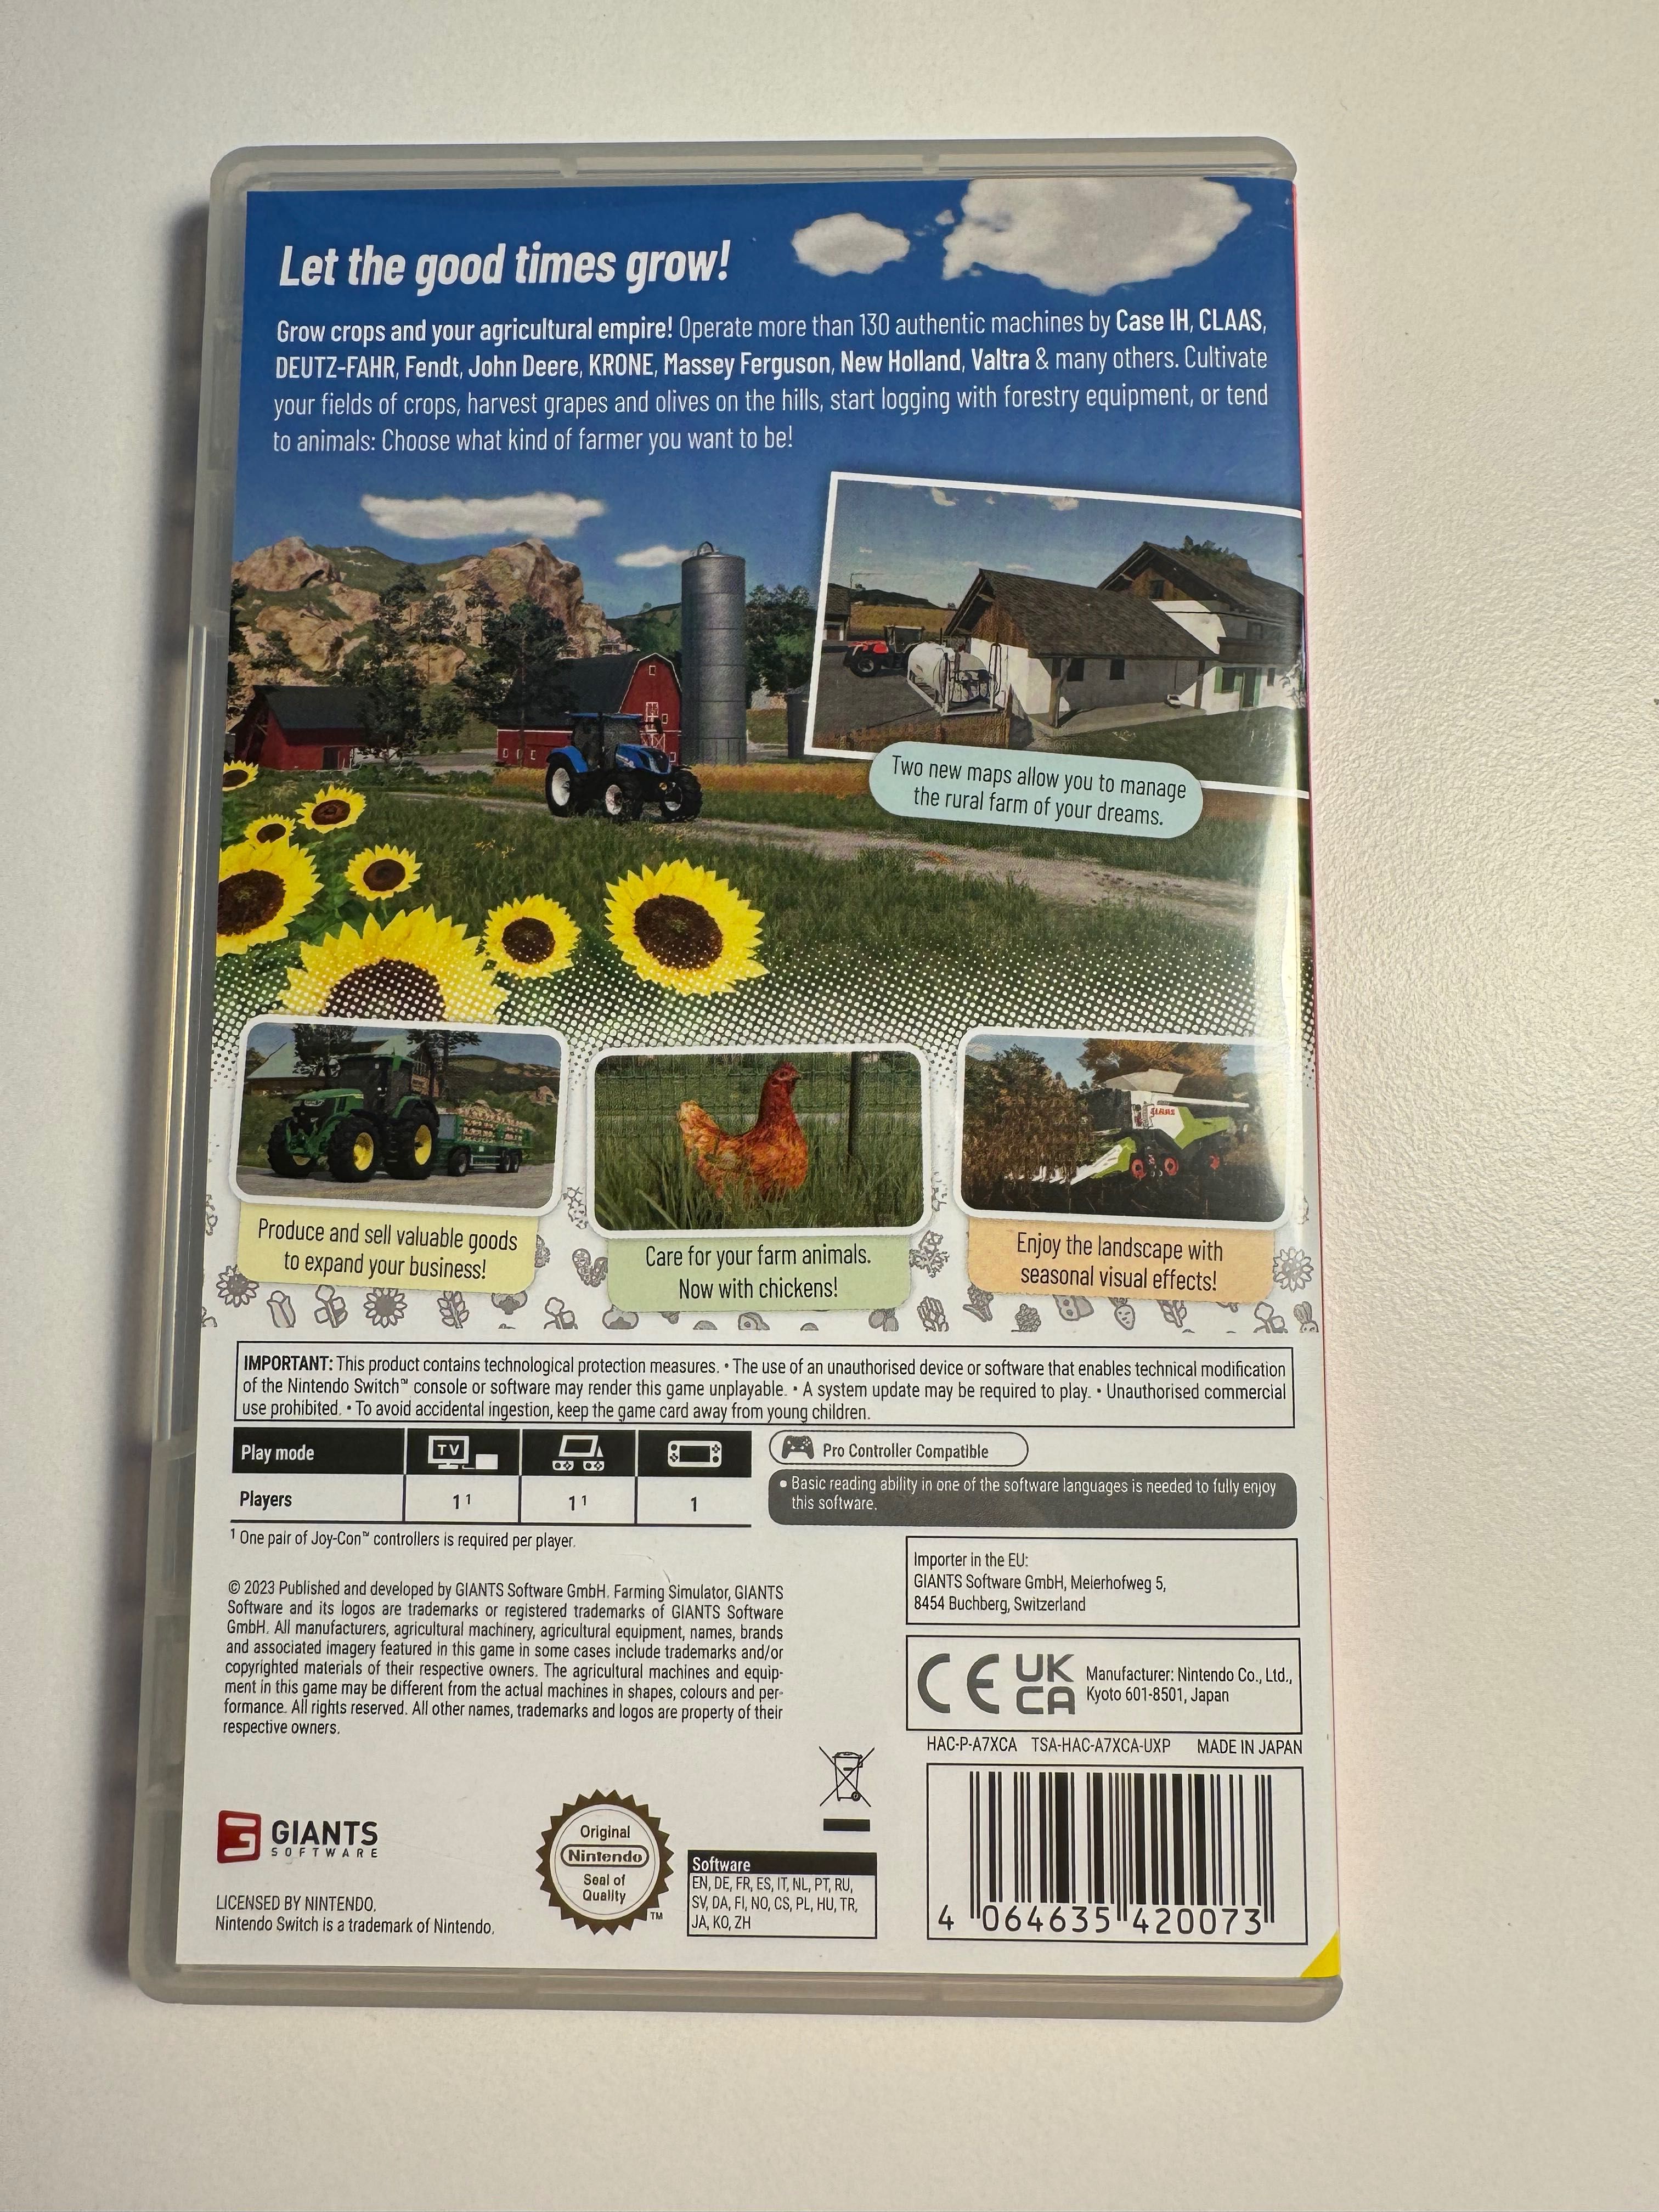 Farming Simulator 23 Nintendo Switch Edition